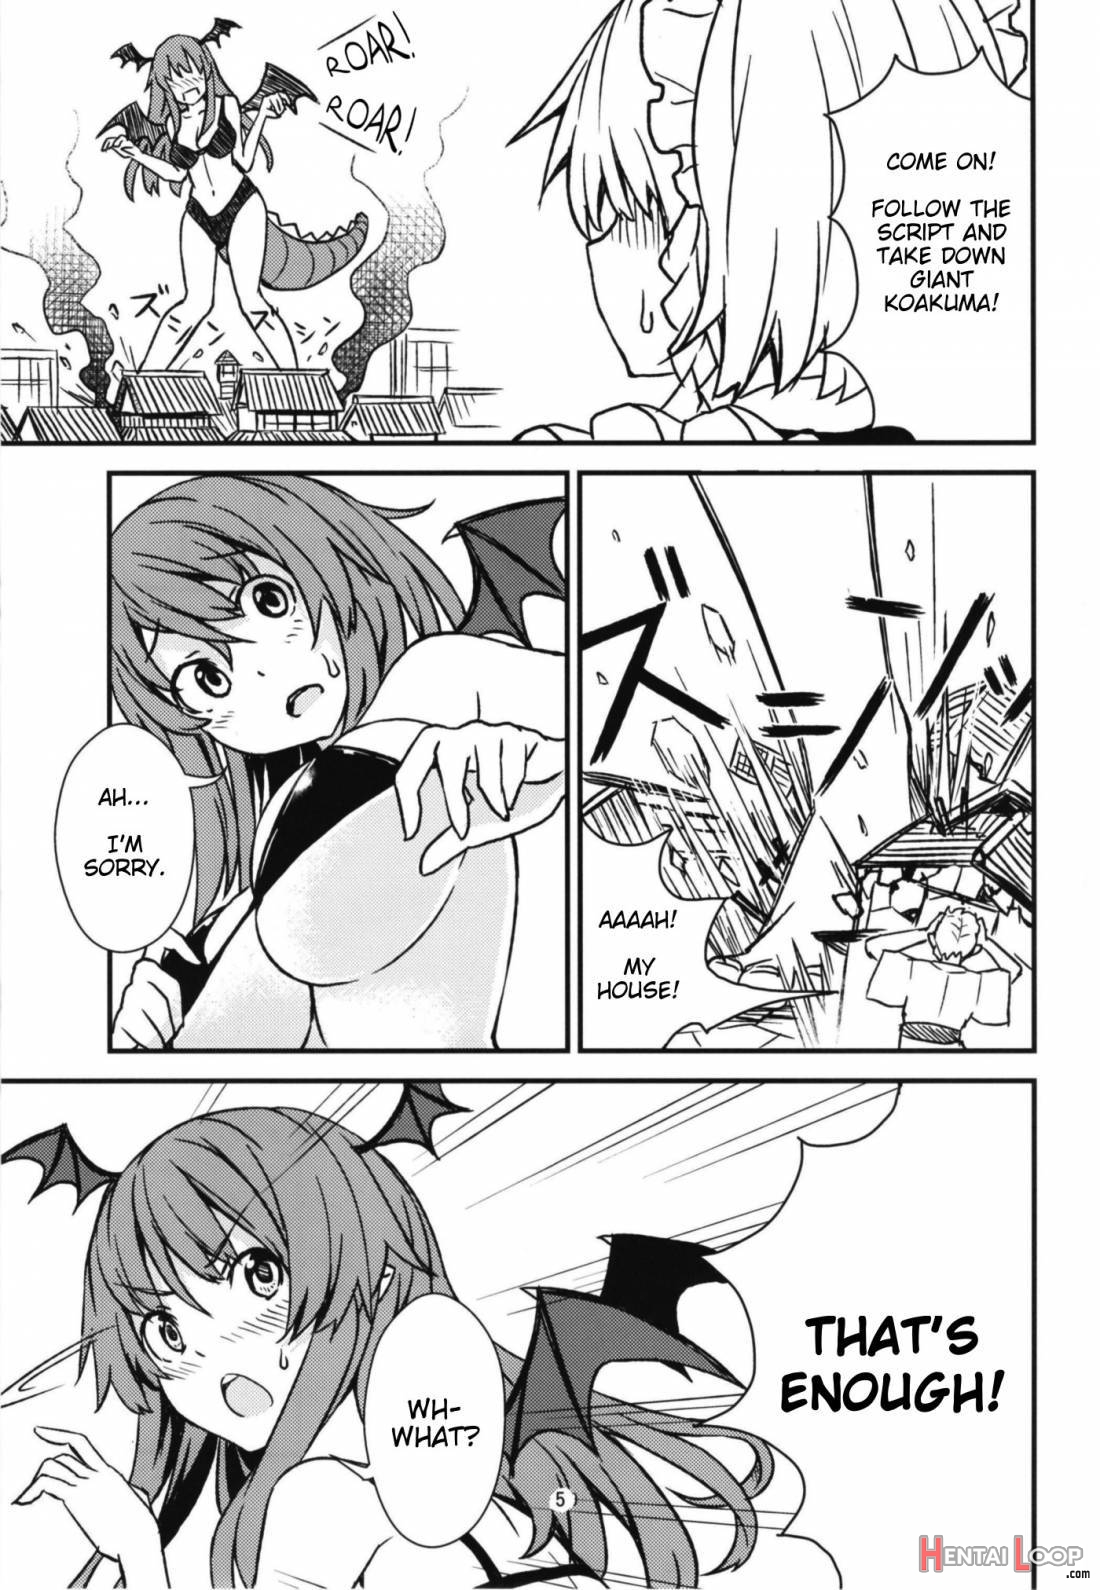 Mega Sakuya vs Giant Koakuma page 4